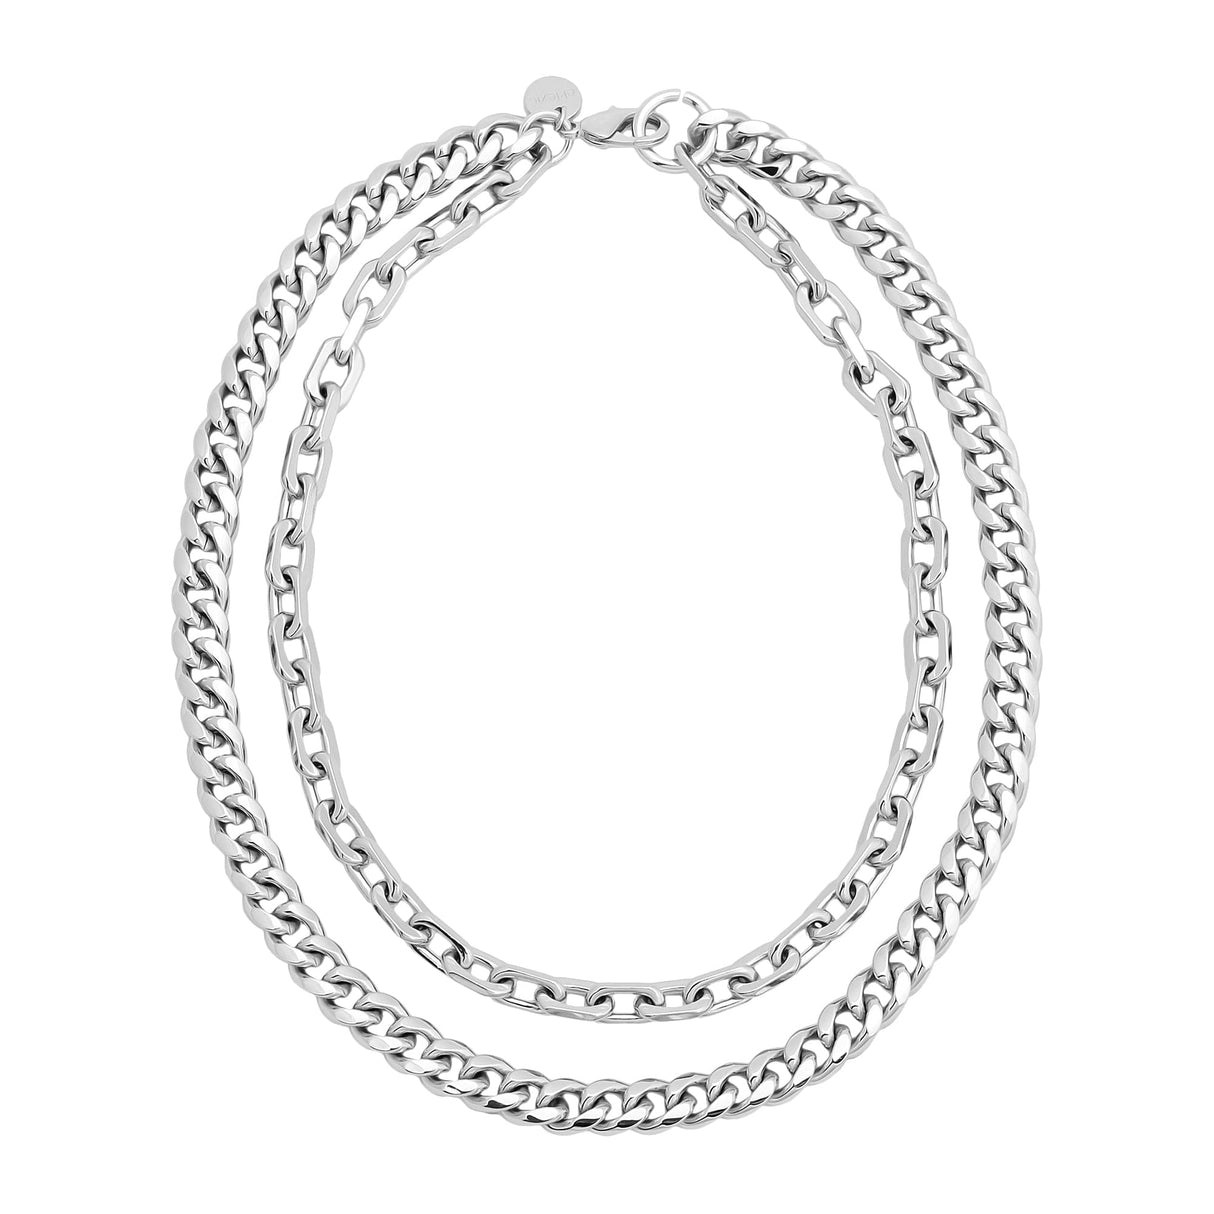 10mm Cash Necklace - Sumiye Co